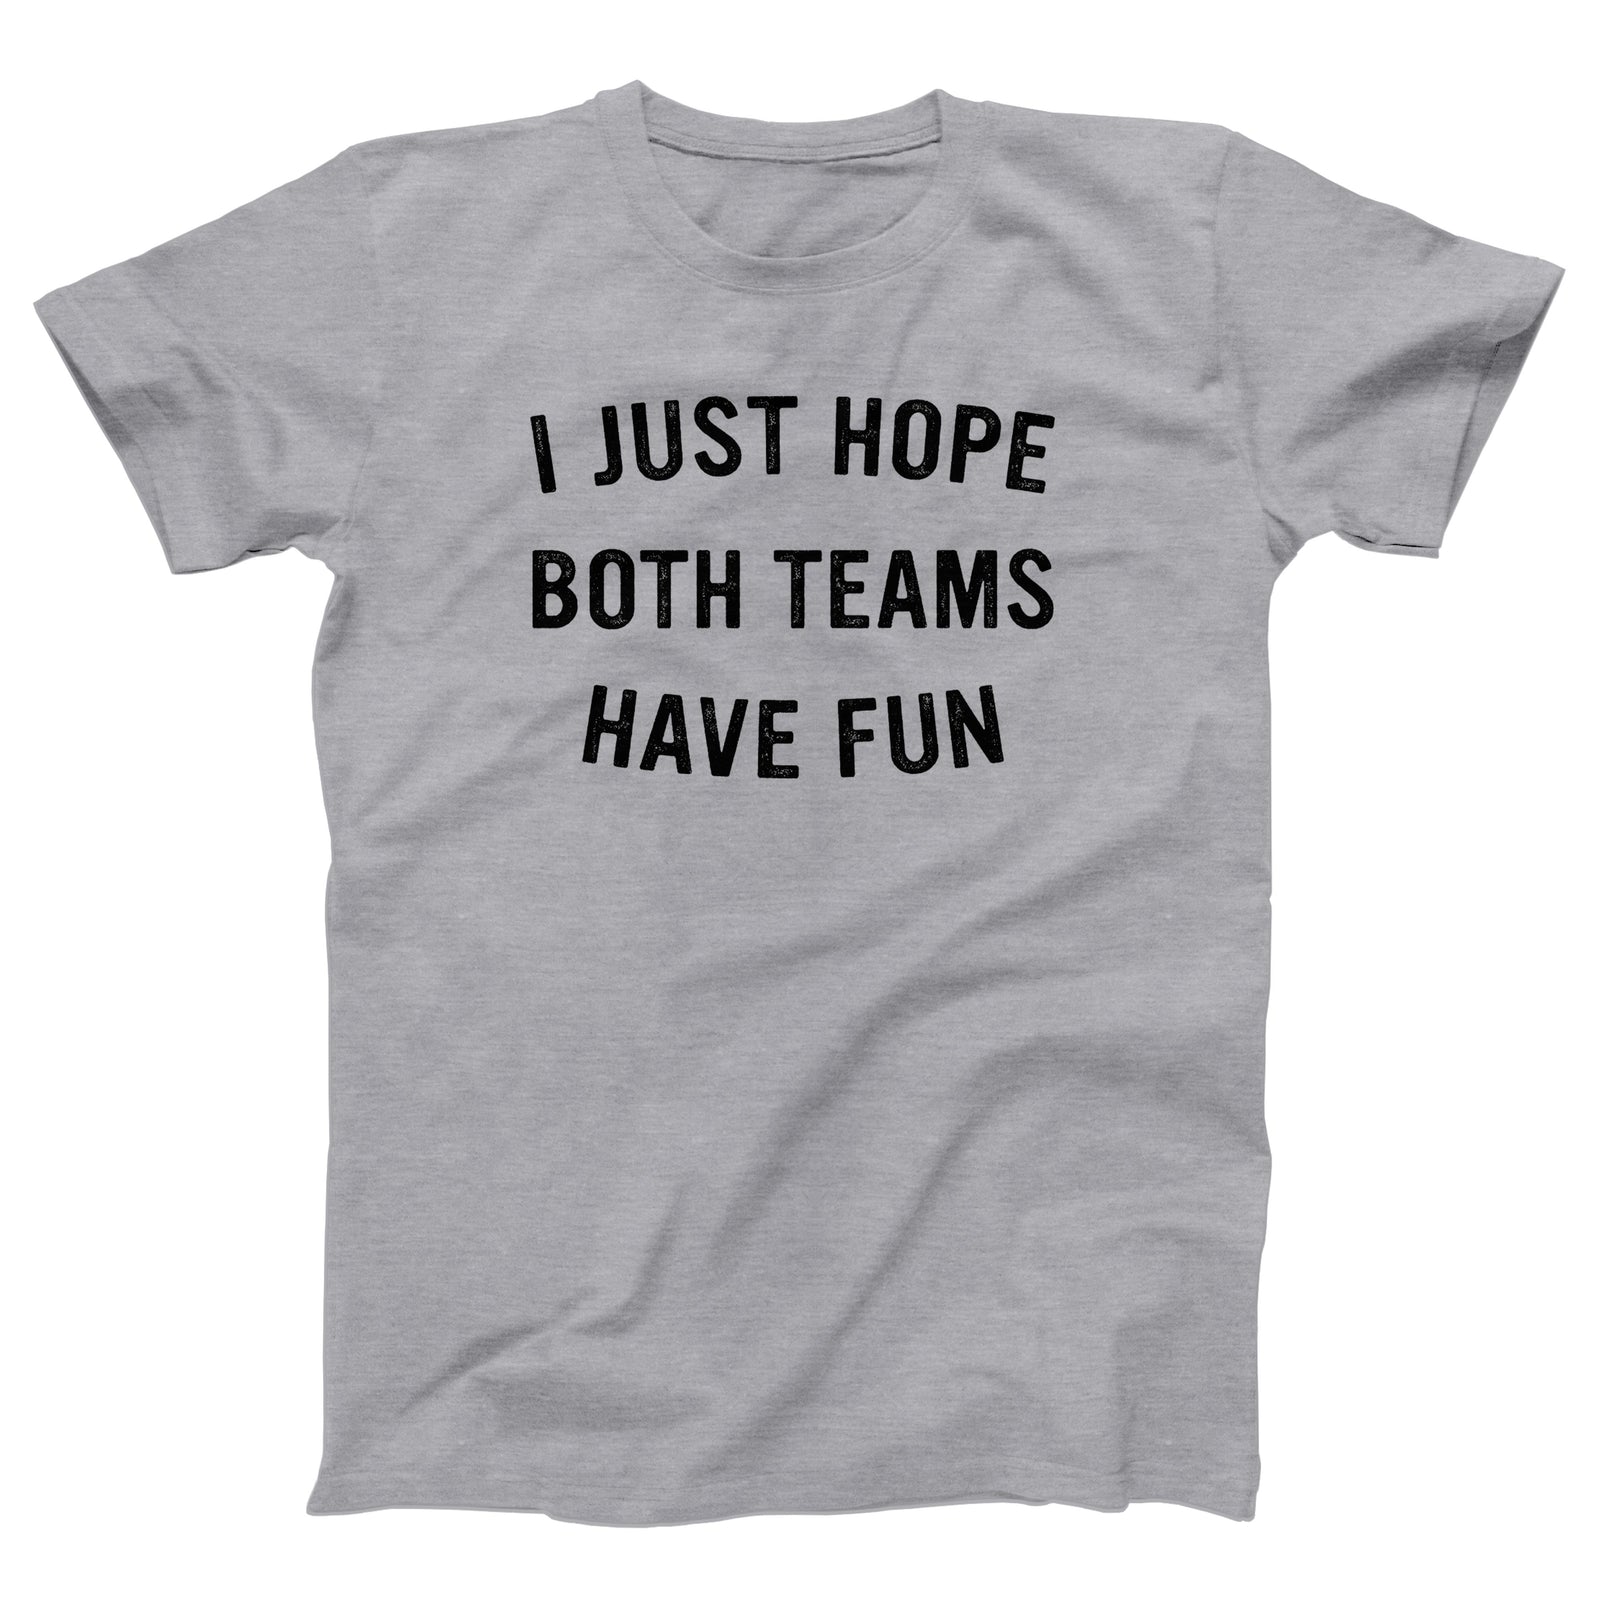 //cdn.shopify.com/s/files/1/0274/2488/2766/products/i-just-hope-both-teams-have-fun-menunisex-t-shirt-777947_5000x.jpg?v=1621237076 5000w,
    //cdn.shopify.com/s/files/1/0274/2488/2766/products/i-just-hope-both-teams-have-fun-menunisex-t-shirt-777947_4500x.jpg?v=1621237076 4500w,
    //cdn.shopify.com/s/files/1/0274/2488/2766/products/i-just-hope-both-teams-have-fun-menunisex-t-shirt-777947_4000x.jpg?v=1621237076 4000w,
    //cdn.shopify.com/s/files/1/0274/2488/2766/products/i-just-hope-both-teams-have-fun-menunisex-t-shirt-777947_3500x.jpg?v=1621237076 3500w,
    //cdn.shopify.com/s/files/1/0274/2488/2766/products/i-just-hope-both-teams-have-fun-menunisex-t-shirt-777947_3000x.jpg?v=1621237076 3000w,
    //cdn.shopify.com/s/files/1/0274/2488/2766/products/i-just-hope-both-teams-have-fun-menunisex-t-shirt-777947_2500x.jpg?v=1621237076 2500w,
    //cdn.shopify.com/s/files/1/0274/2488/2766/products/i-just-hope-both-teams-have-fun-menunisex-t-shirt-777947_2000x.jpg?v=1621237076 2000w,
    //cdn.shopify.com/s/files/1/0274/2488/2766/products/i-just-hope-both-teams-have-fun-menunisex-t-shirt-777947_1800x.jpg?v=1621237076 1800w,
    //cdn.shopify.com/s/files/1/0274/2488/2766/products/i-just-hope-both-teams-have-fun-menunisex-t-shirt-777947_1600x.jpg?v=1621237076 1600w,
    //cdn.shopify.com/s/files/1/0274/2488/2766/products/i-just-hope-both-teams-have-fun-menunisex-t-shirt-777947_1400x.jpg?v=1621237076 1400w,
    //cdn.shopify.com/s/files/1/0274/2488/2766/products/i-just-hope-both-teams-have-fun-menunisex-t-shirt-777947_1200x.jpg?v=1621237076 1200w,
    //cdn.shopify.com/s/files/1/0274/2488/2766/products/i-just-hope-both-teams-have-fun-menunisex-t-shirt-777947_1000x.jpg?v=1621237076 1000w,
    //cdn.shopify.com/s/files/1/0274/2488/2766/products/i-just-hope-both-teams-have-fun-menunisex-t-shirt-777947_800x.jpg?v=1621237076 800w,
    //cdn.shopify.com/s/files/1/0274/2488/2766/products/i-just-hope-both-teams-have-fun-menunisex-t-shirt-777947_600x.jpg?v=1621237076 600w,
    //cdn.shopify.com/s/files/1/0274/2488/2766/products/i-just-hope-both-teams-have-fun-menunisex-t-shirt-777947_400x.jpg?v=1621237076 400w,
    //cdn.shopify.com/s/files/1/0274/2488/2766/products/i-just-hope-both-teams-have-fun-menunisex-t-shirt-777947_200x.jpg?v=1621237076 200w